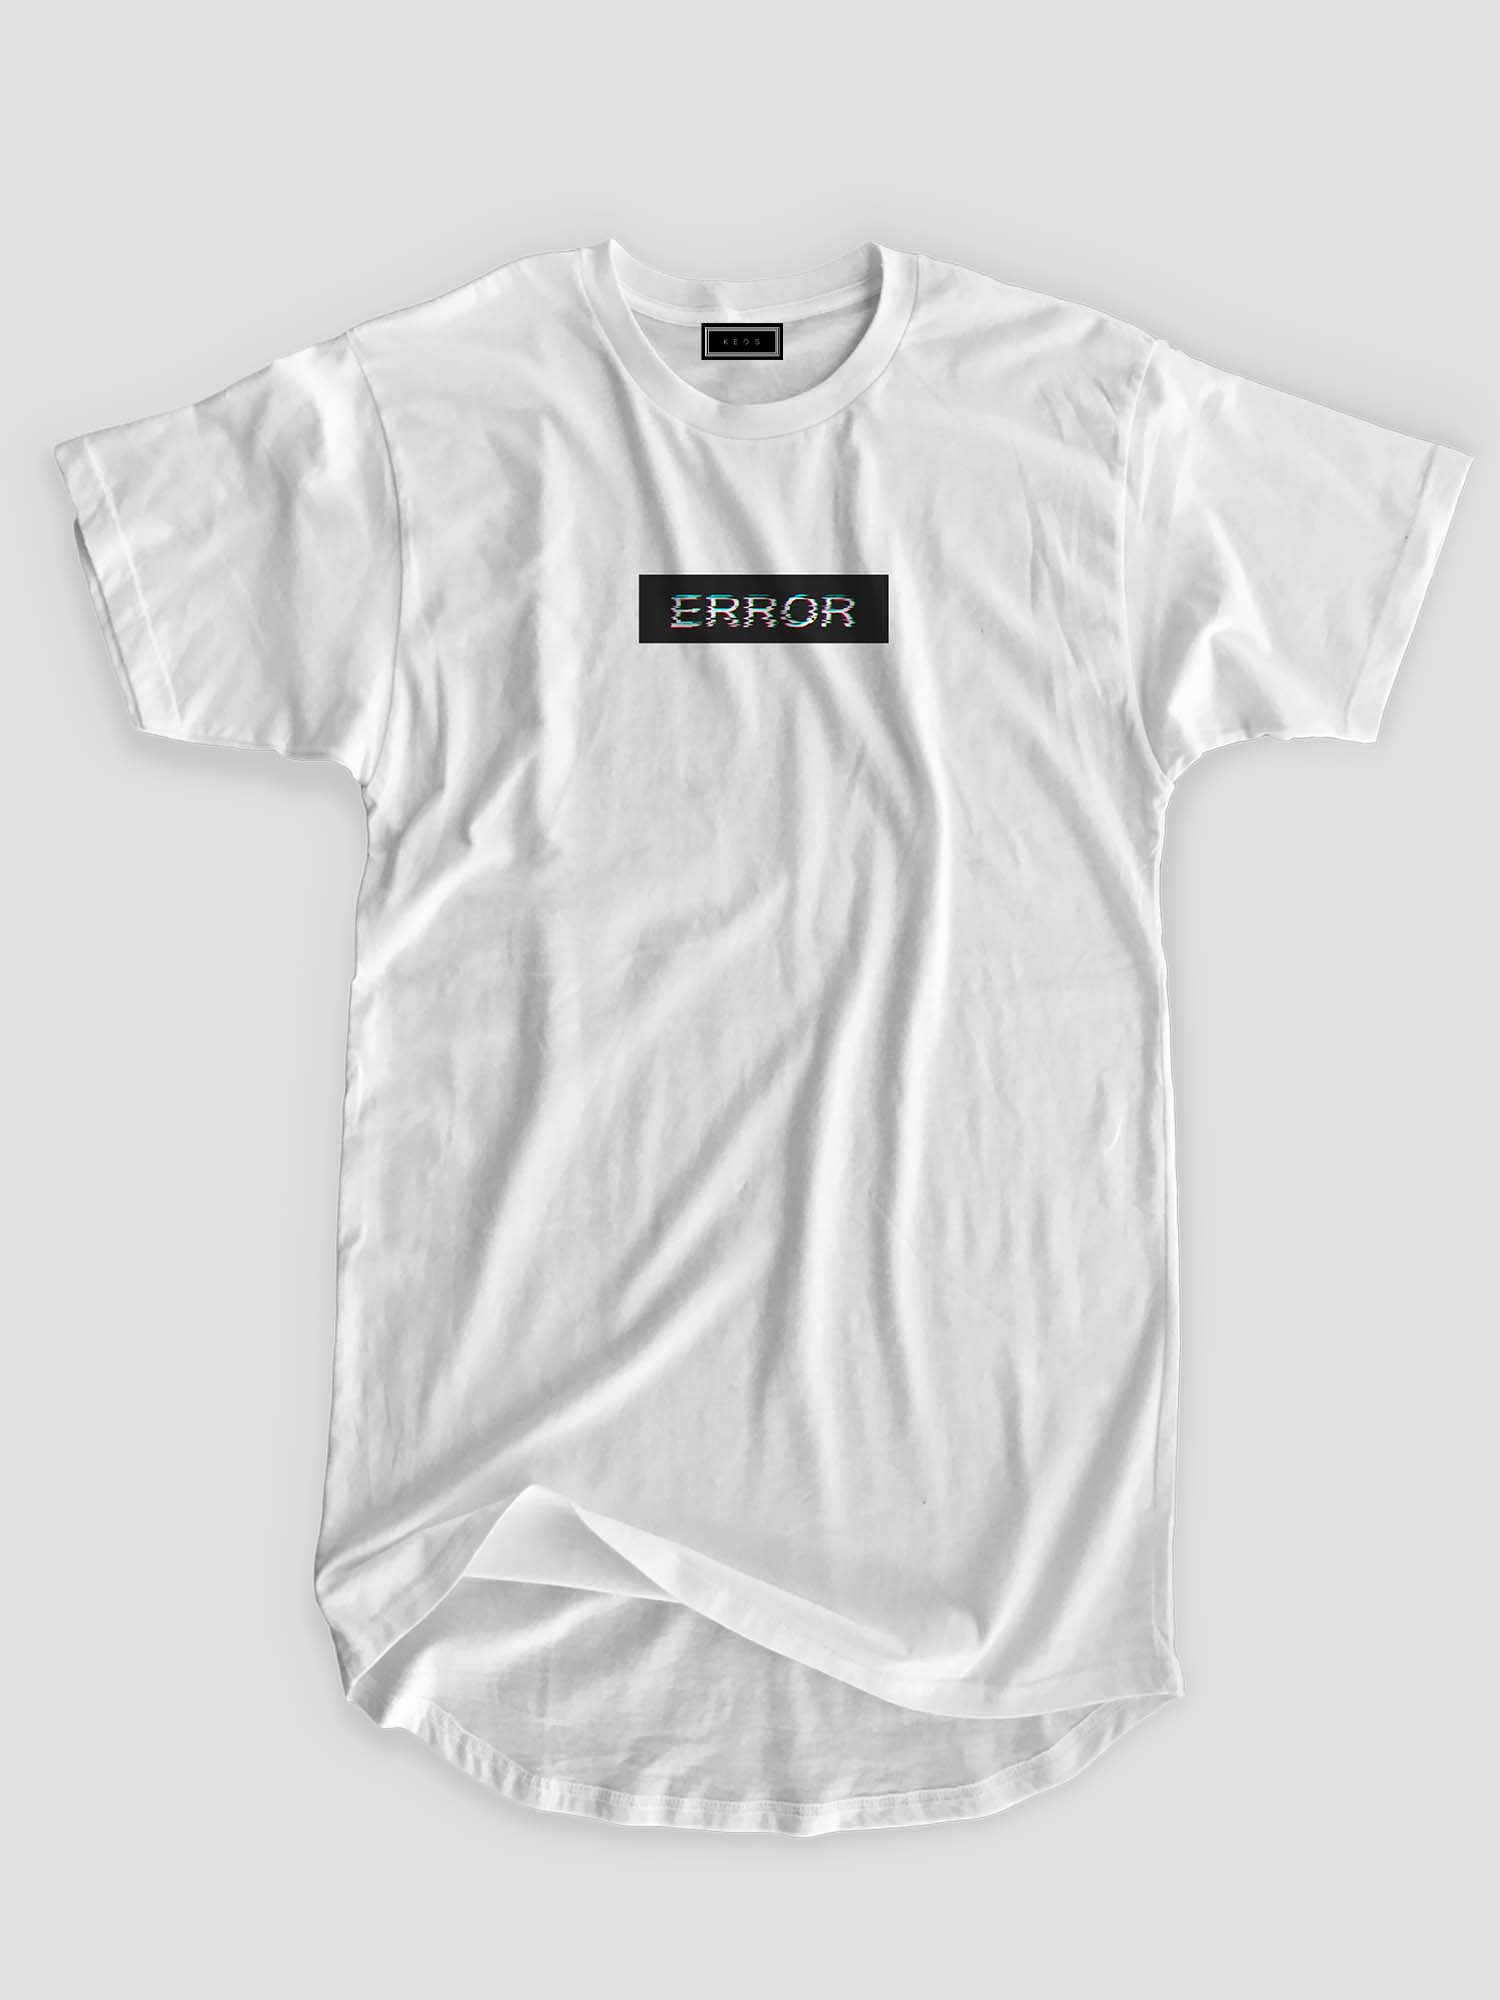 Longline Error Organic Cotton T-shirt - keos.life